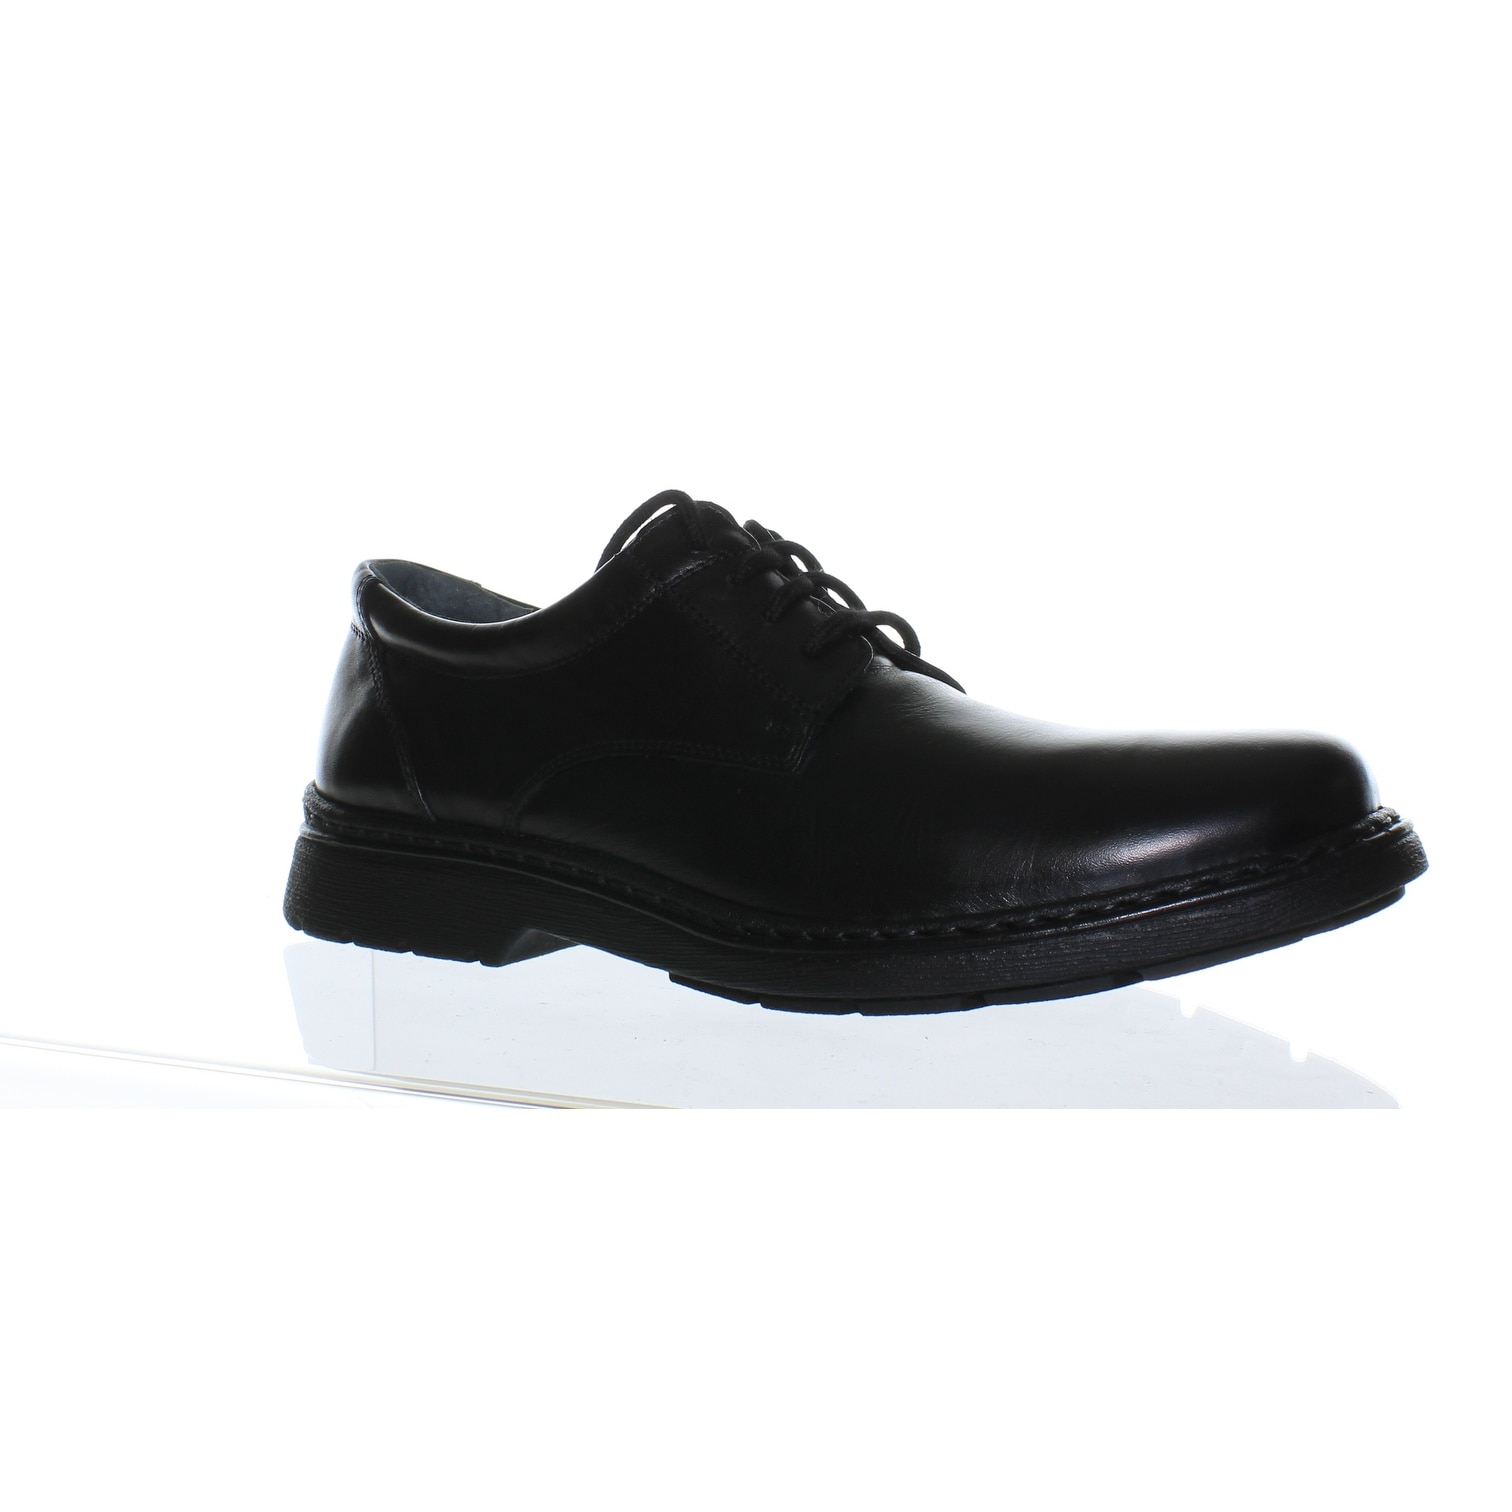 Leather Oxford Dress Shoe Size 9.5 (E 